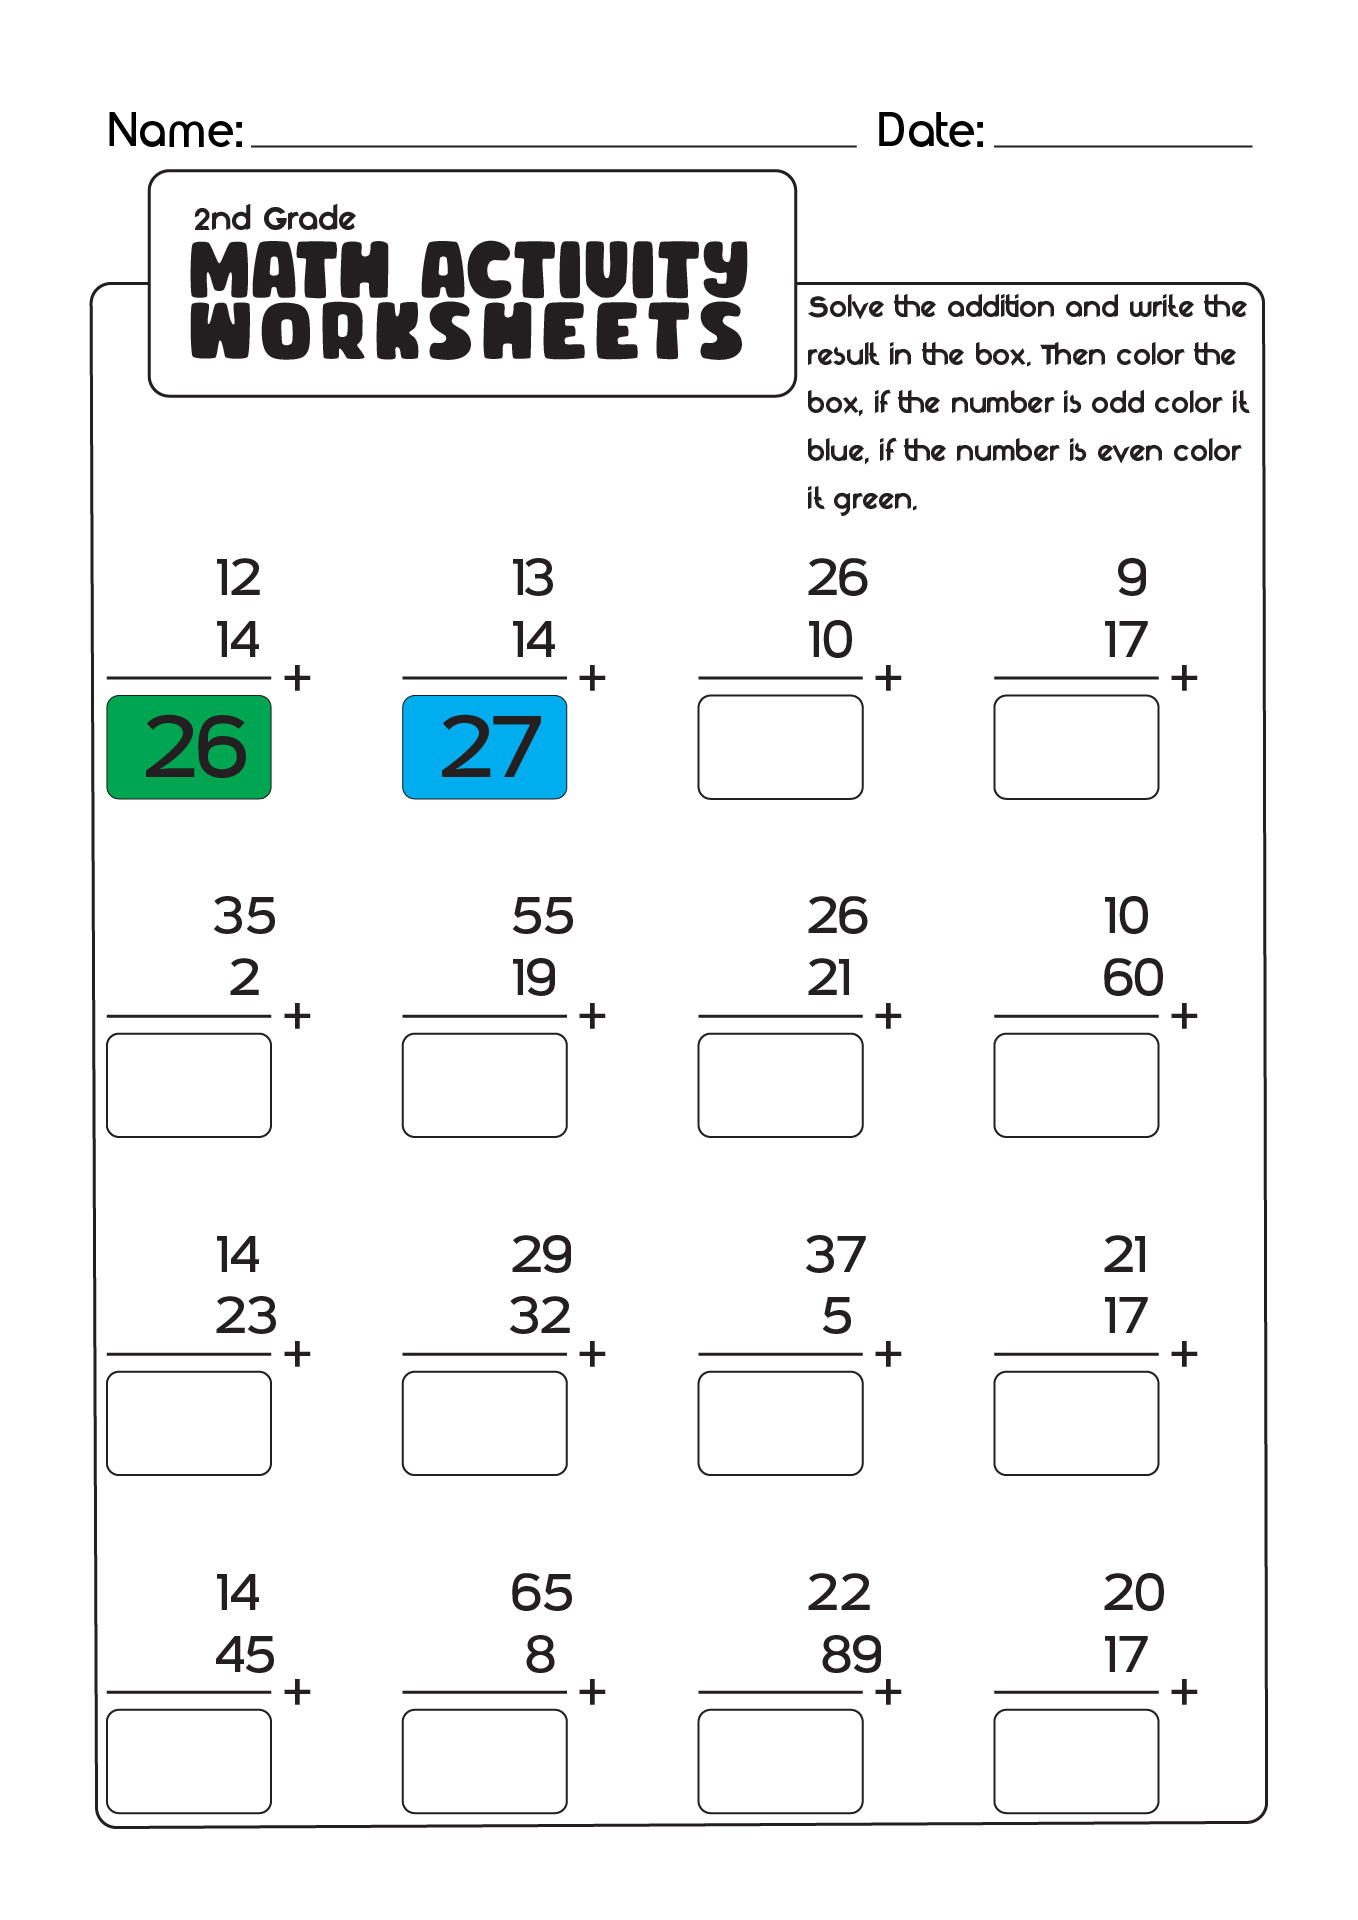 2nd Grade Math Activity Worksheets Image